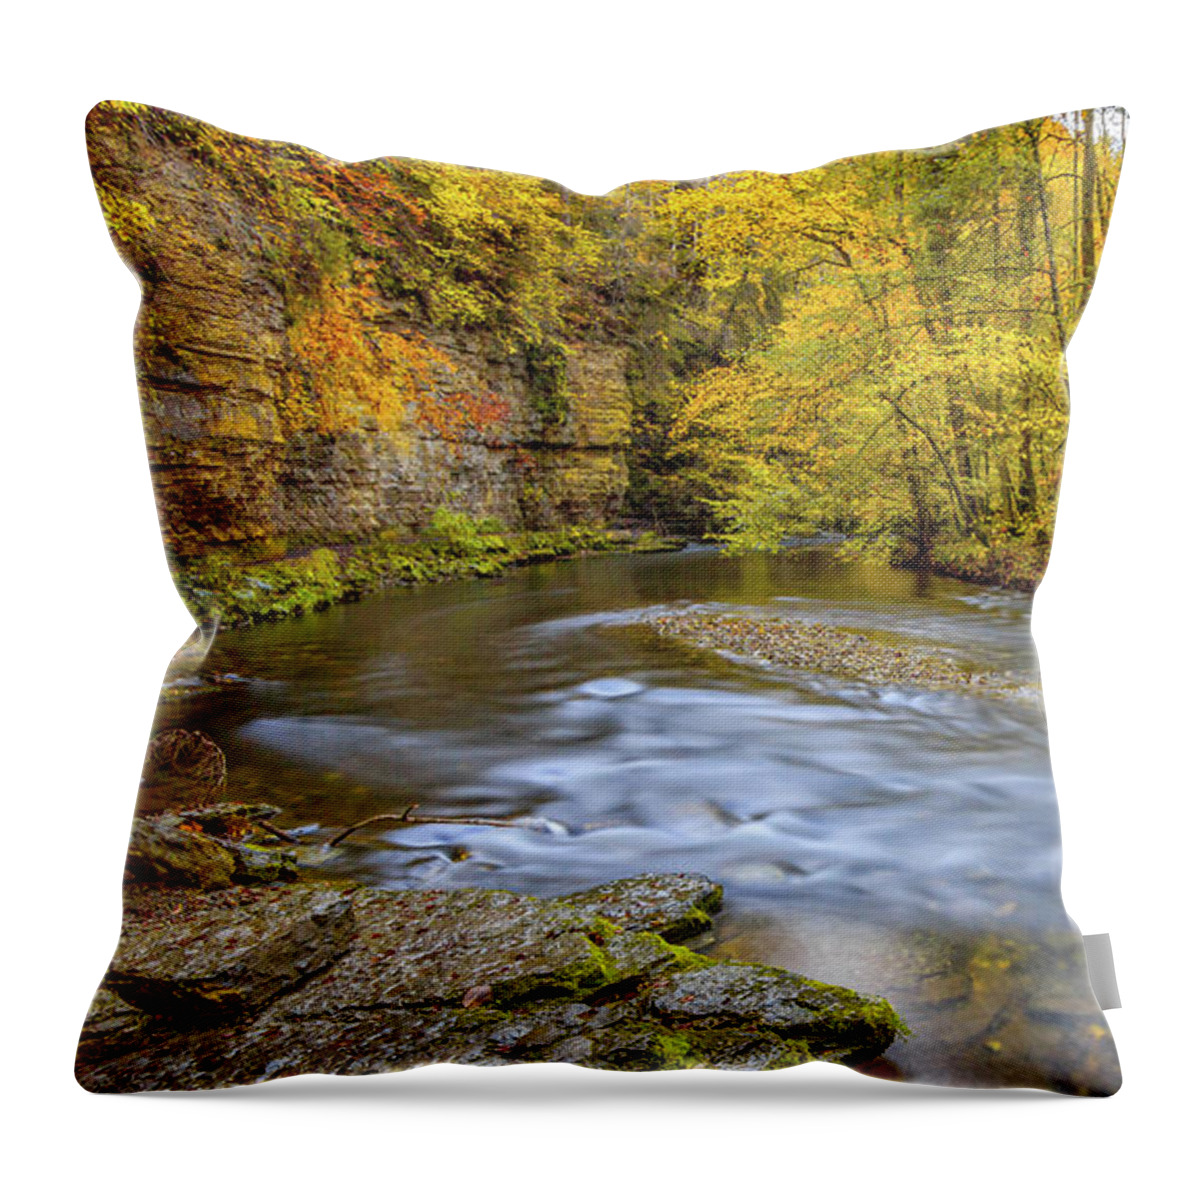 Wutach-gorge Throw Pillow featuring the photograph The Wutach Gorge #2 by Bernd Laeschke